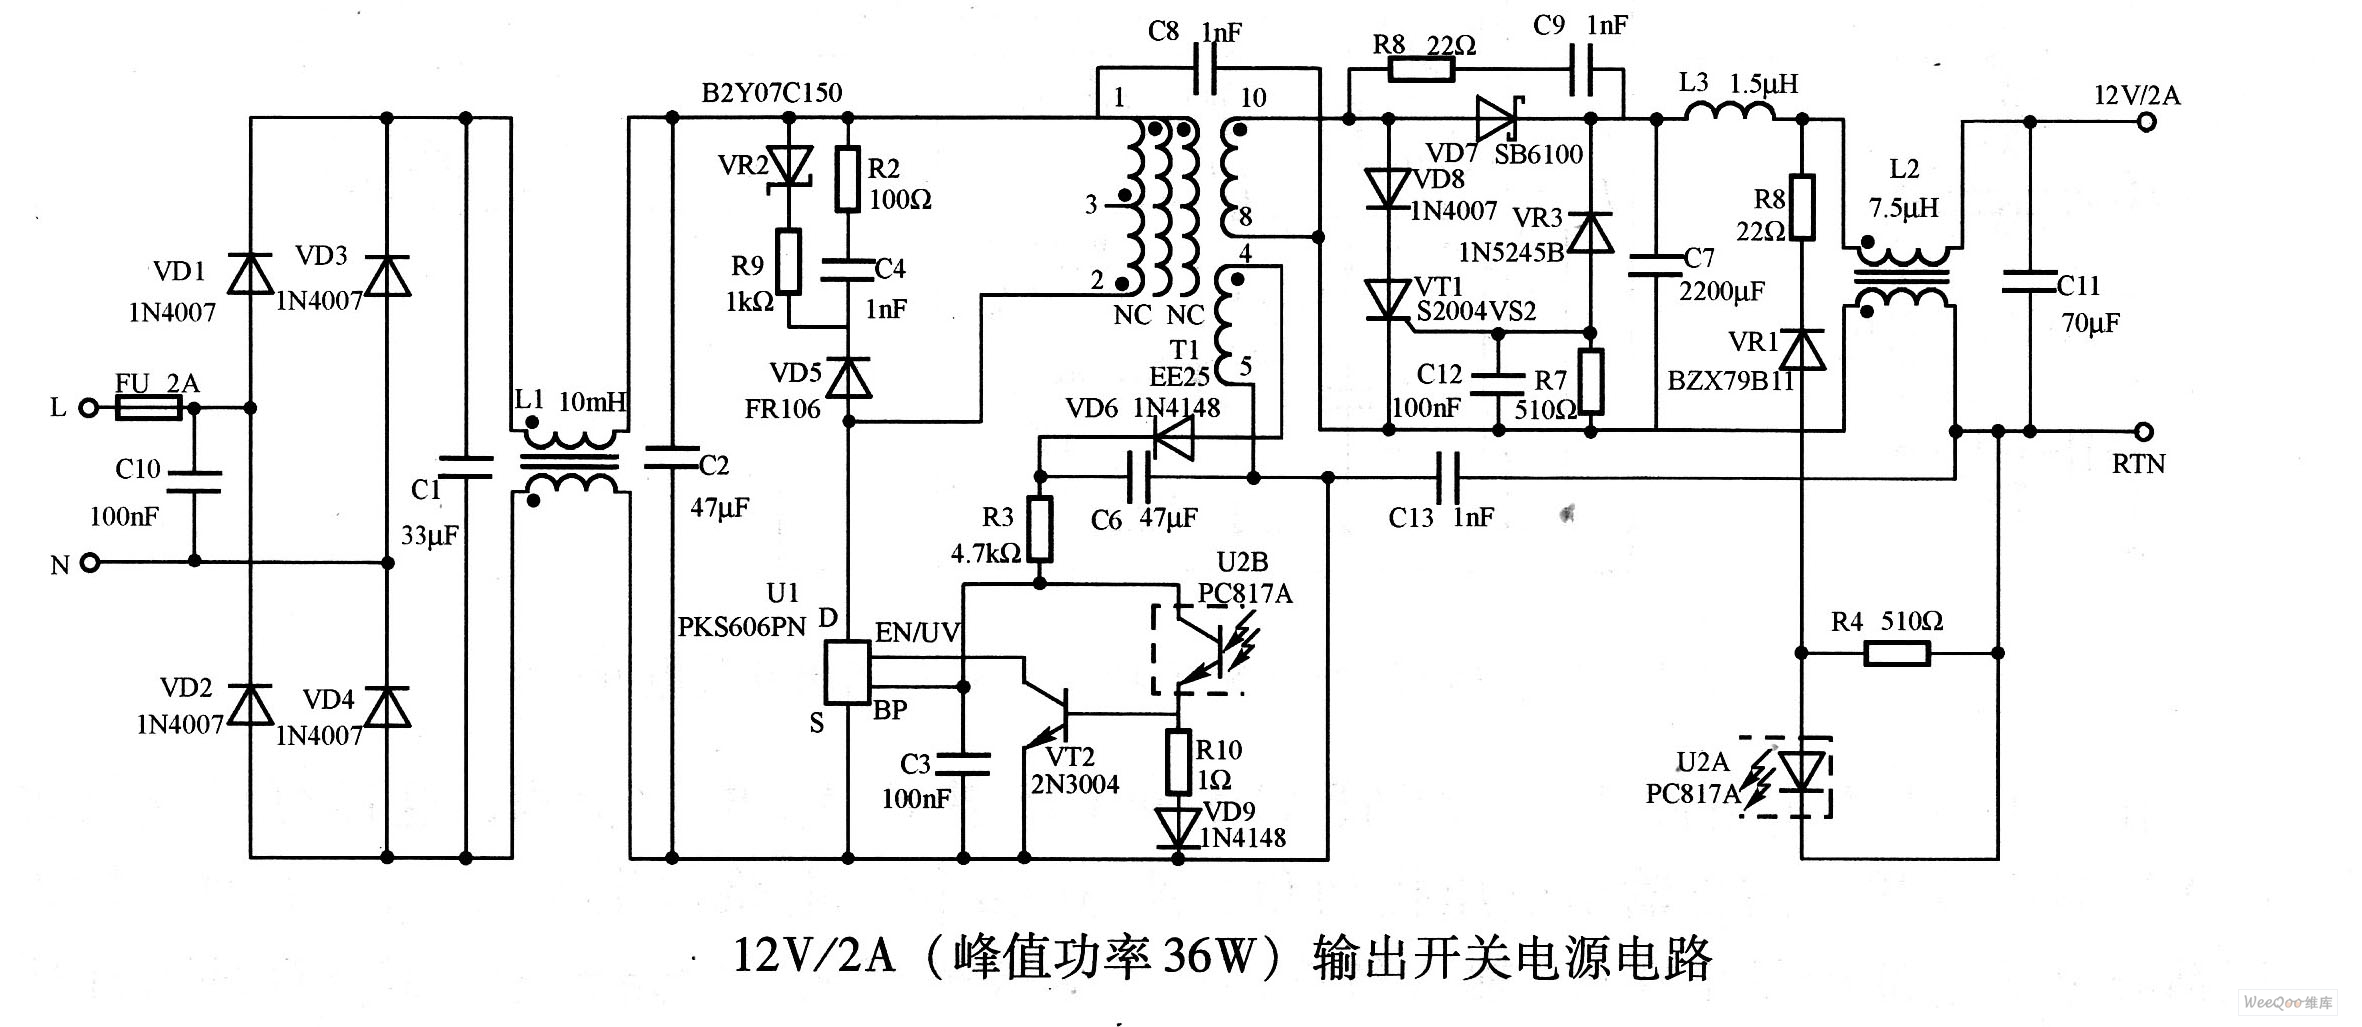 12V／2A(峰值功率36W)输出开关电源电路